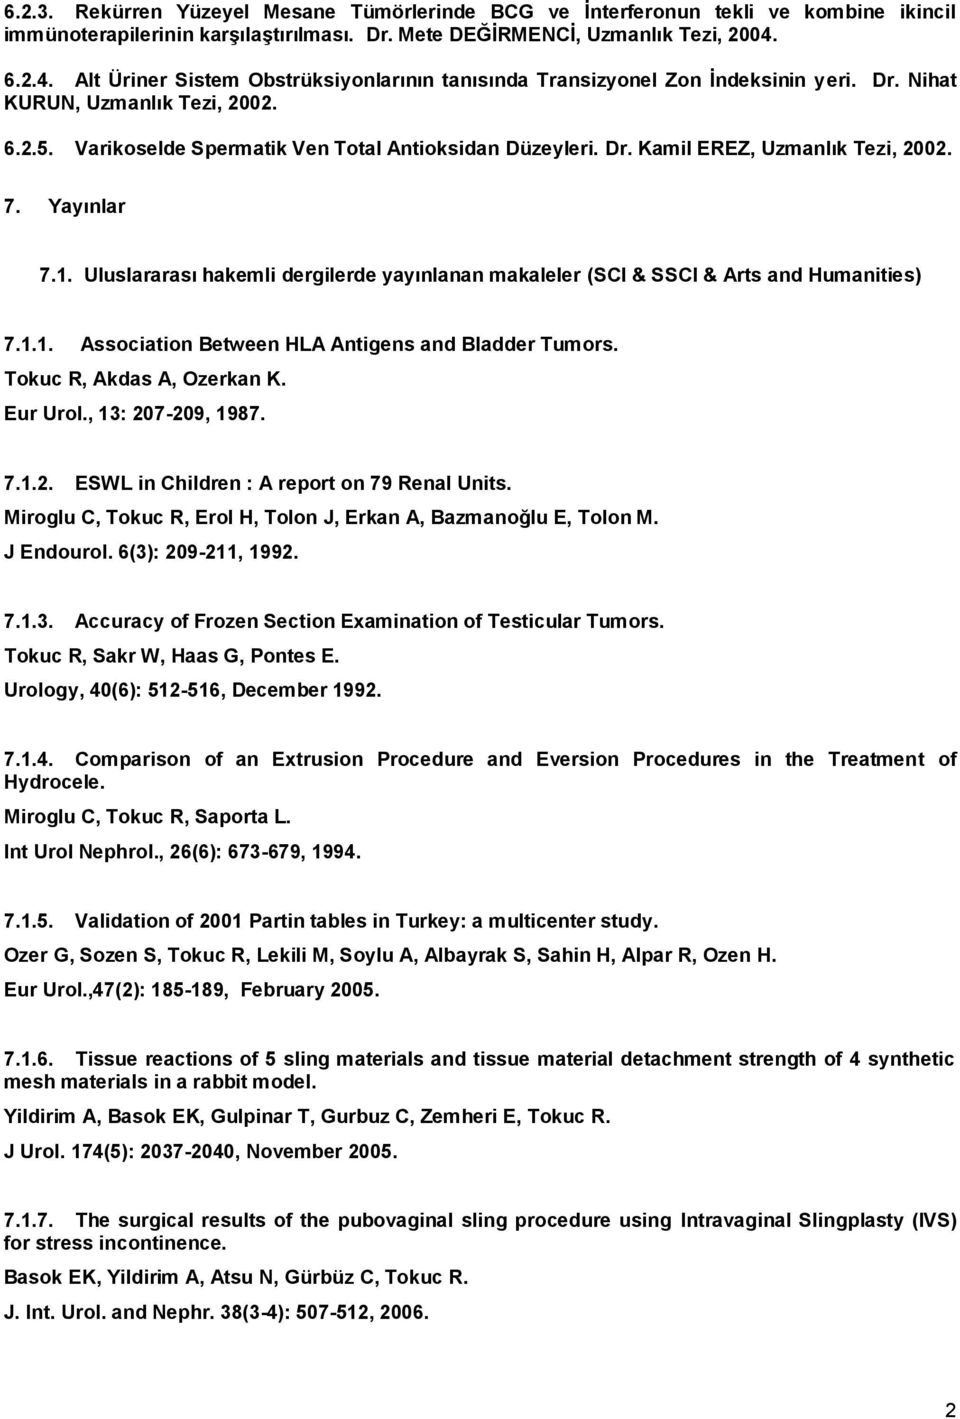 7. Yayınlar 7.1. Uluslararası hakemli dergilerde yayınlanan makaleler (SCI & SSCI & Arts and Humanities) 7.1.1. Association Between HLA Antigens and Bladder Tumors. Tokuc R, Akdas A, Ozerkan K.